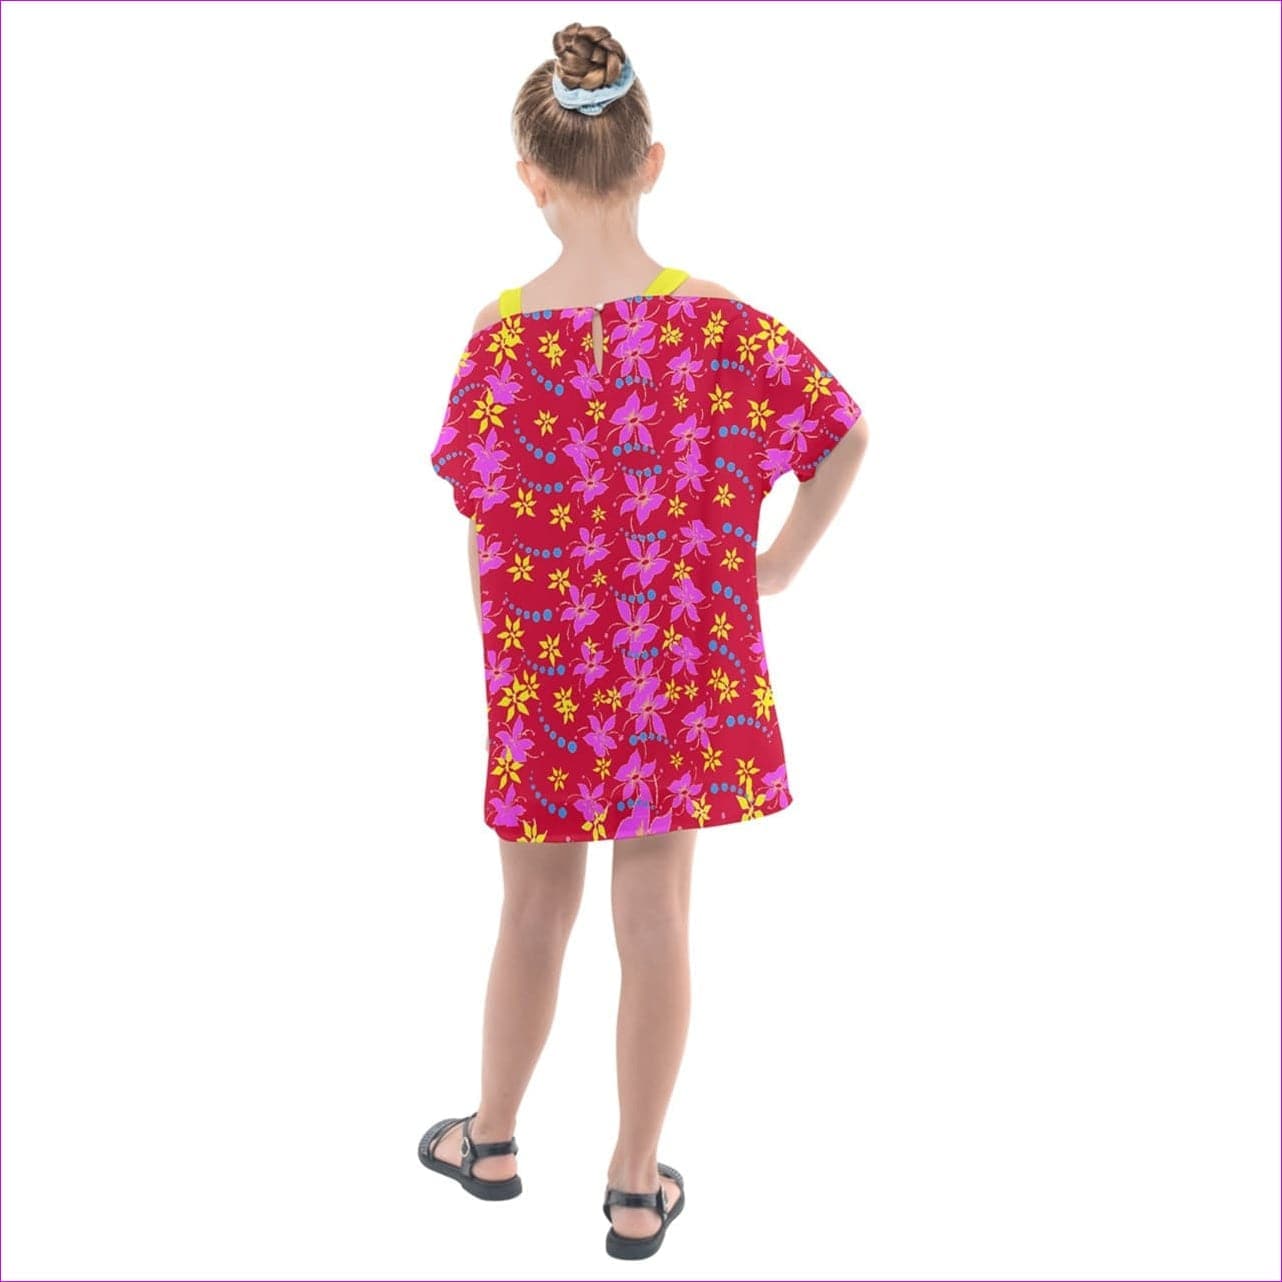 Floral Wear Kids One Piece Chiffon Dress - kid's playwear-dresses at TFC&H Co.